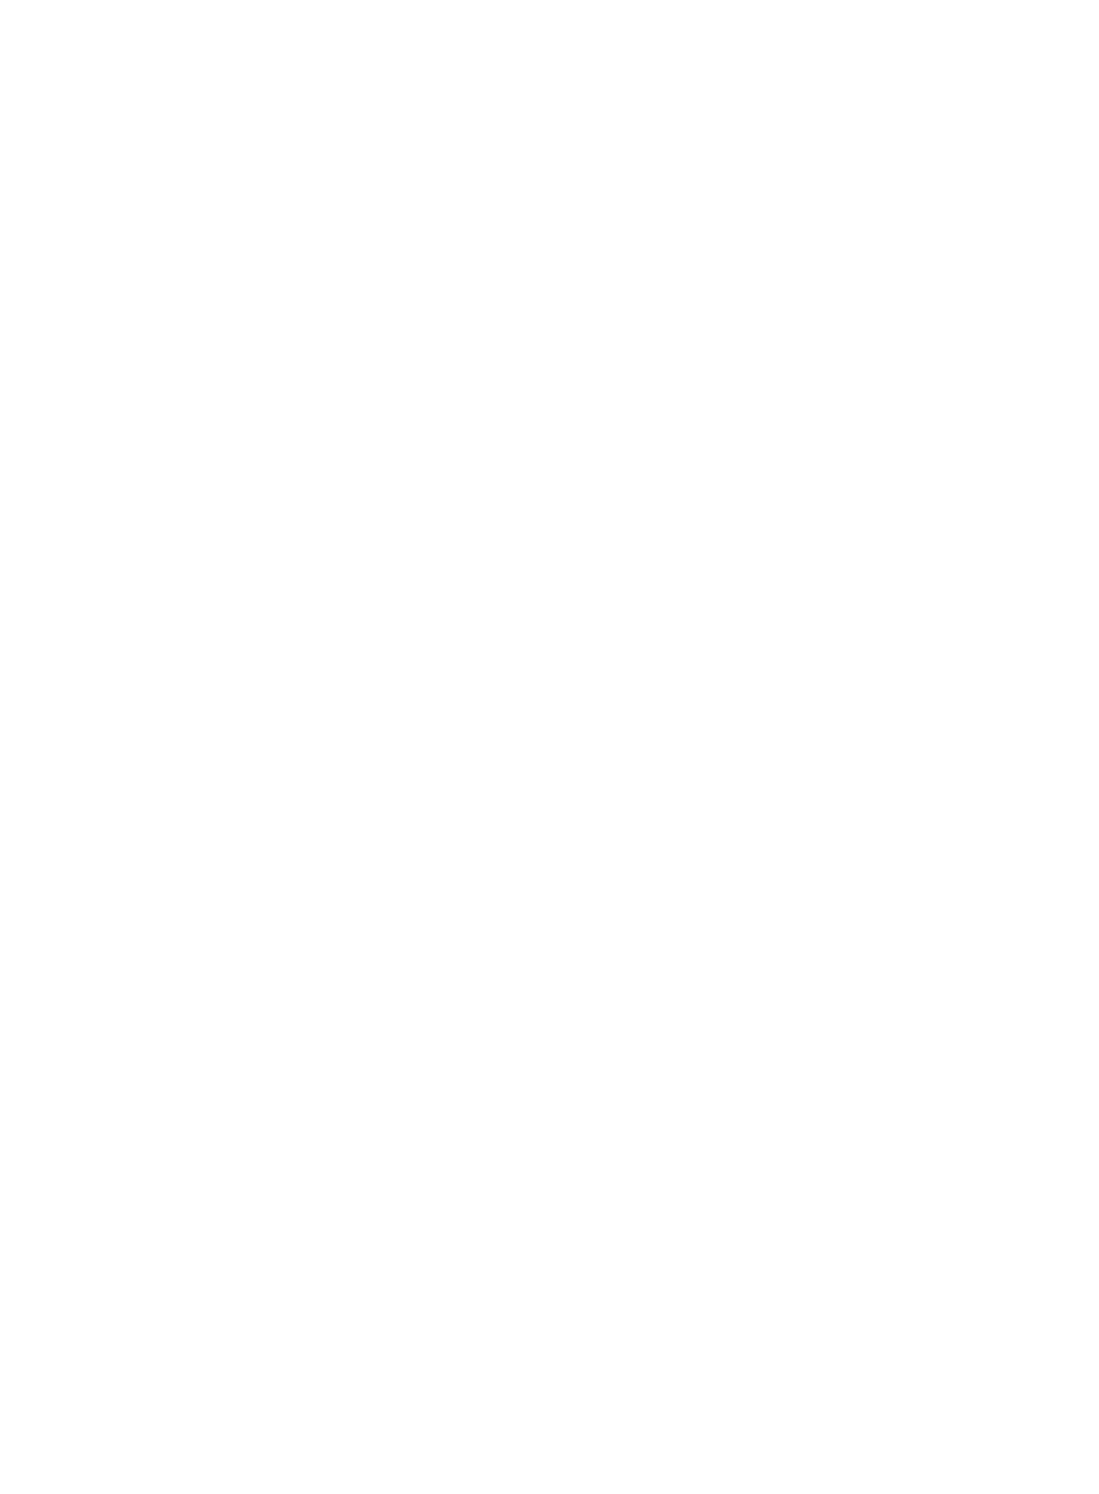 Emaar Development logo pour fonds sombres (PNG transparent)